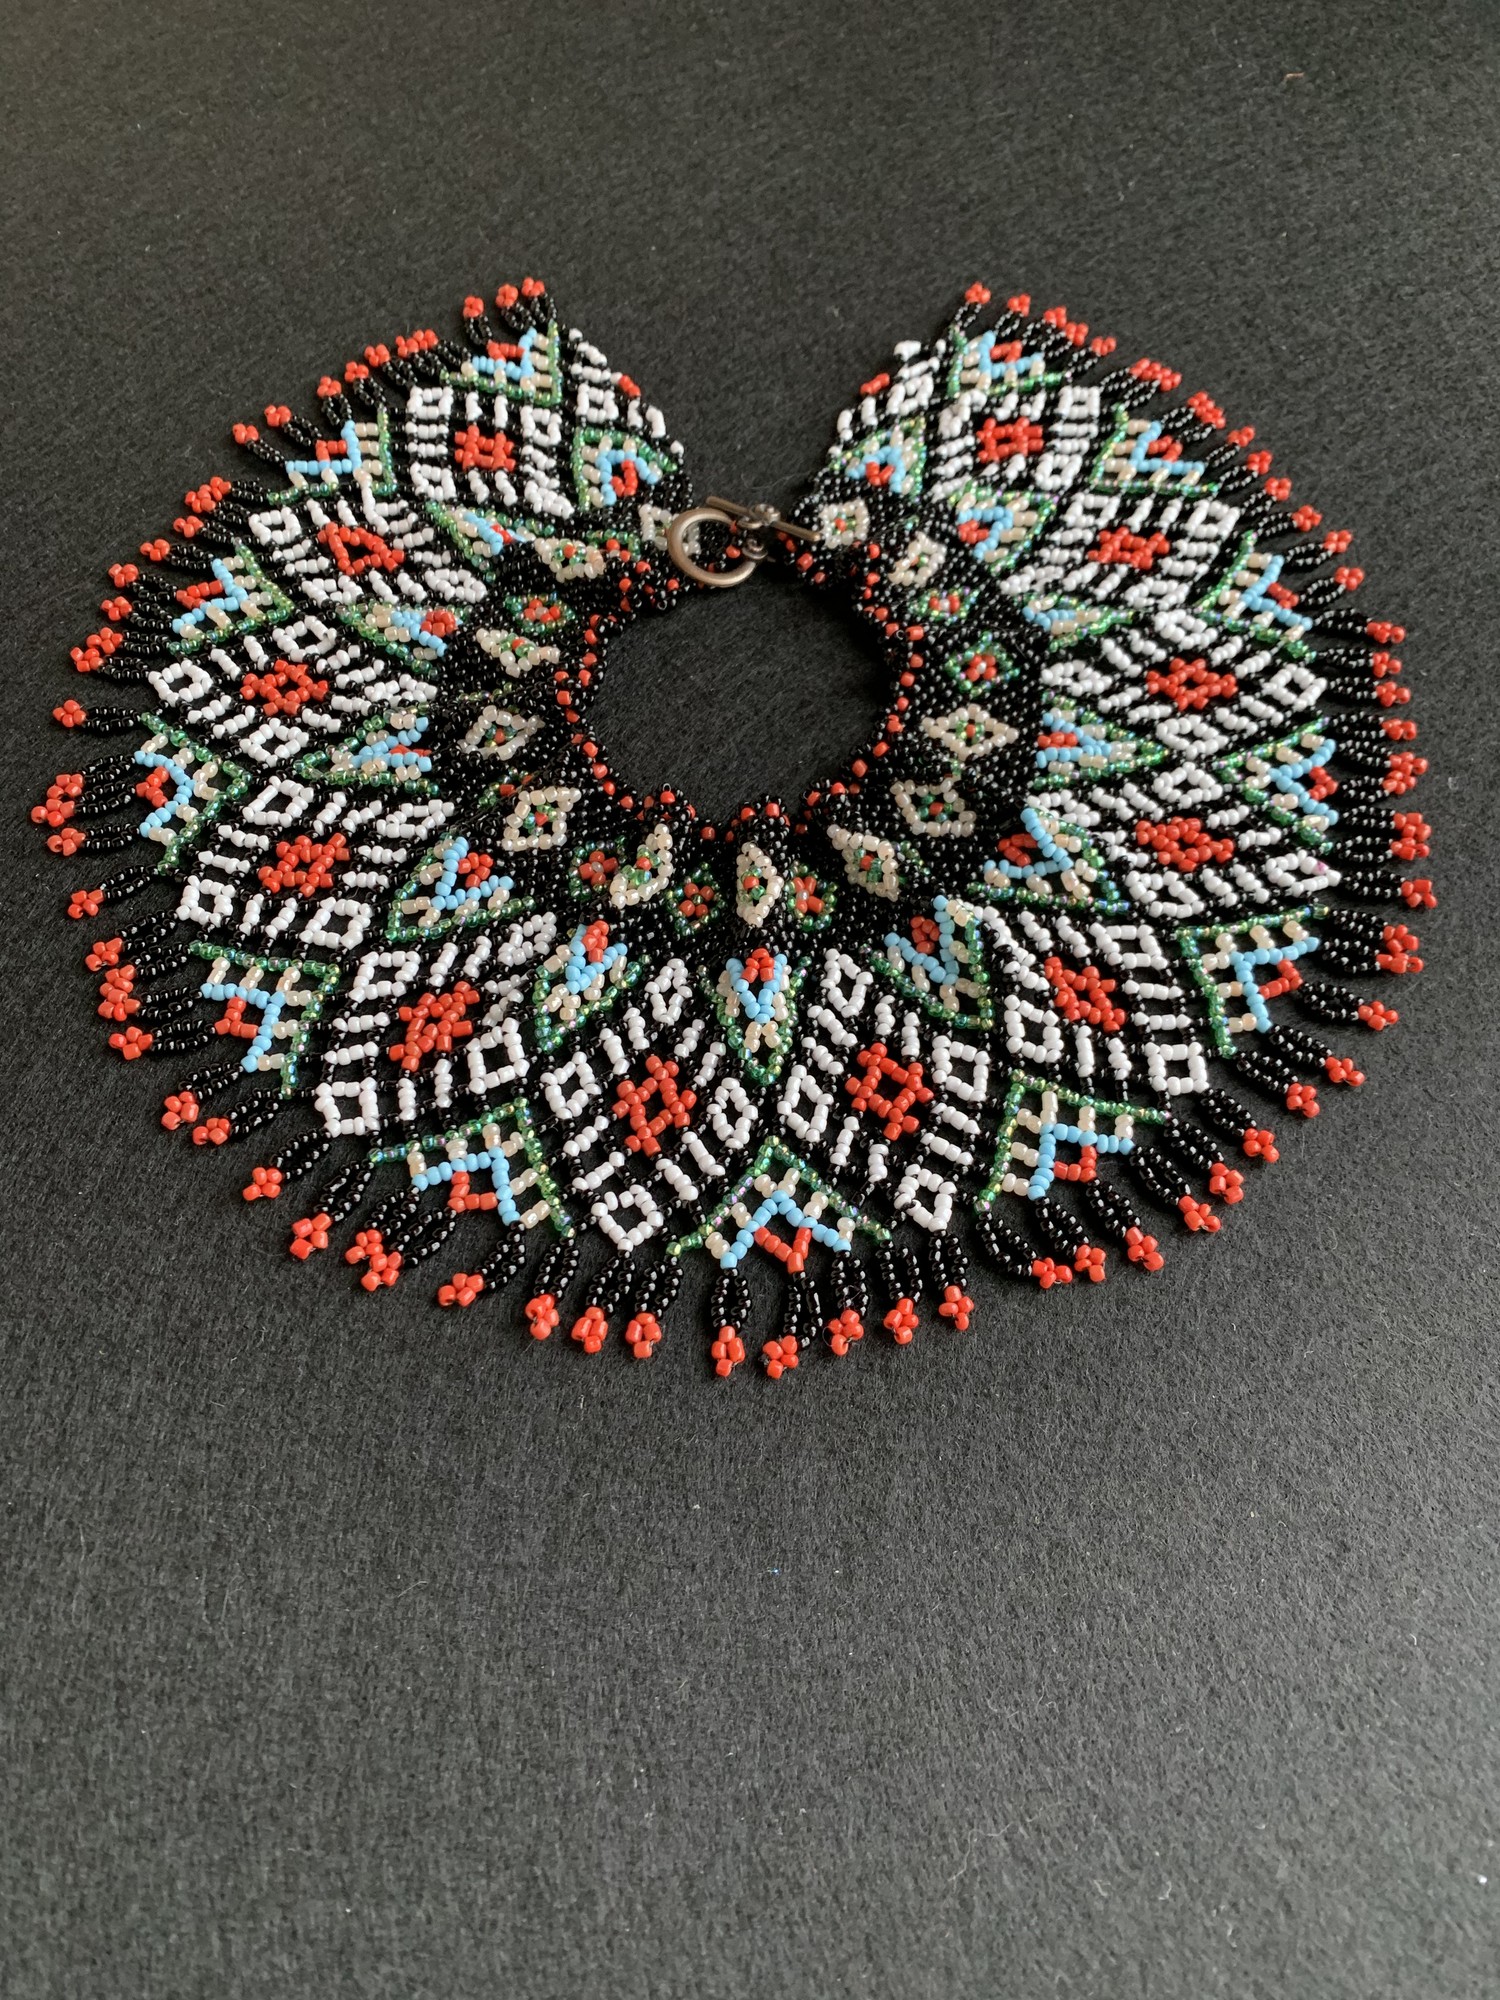 Peasant Ukrainian jewelry, folk necklace made of handmade beads, ethnic folk jewelry